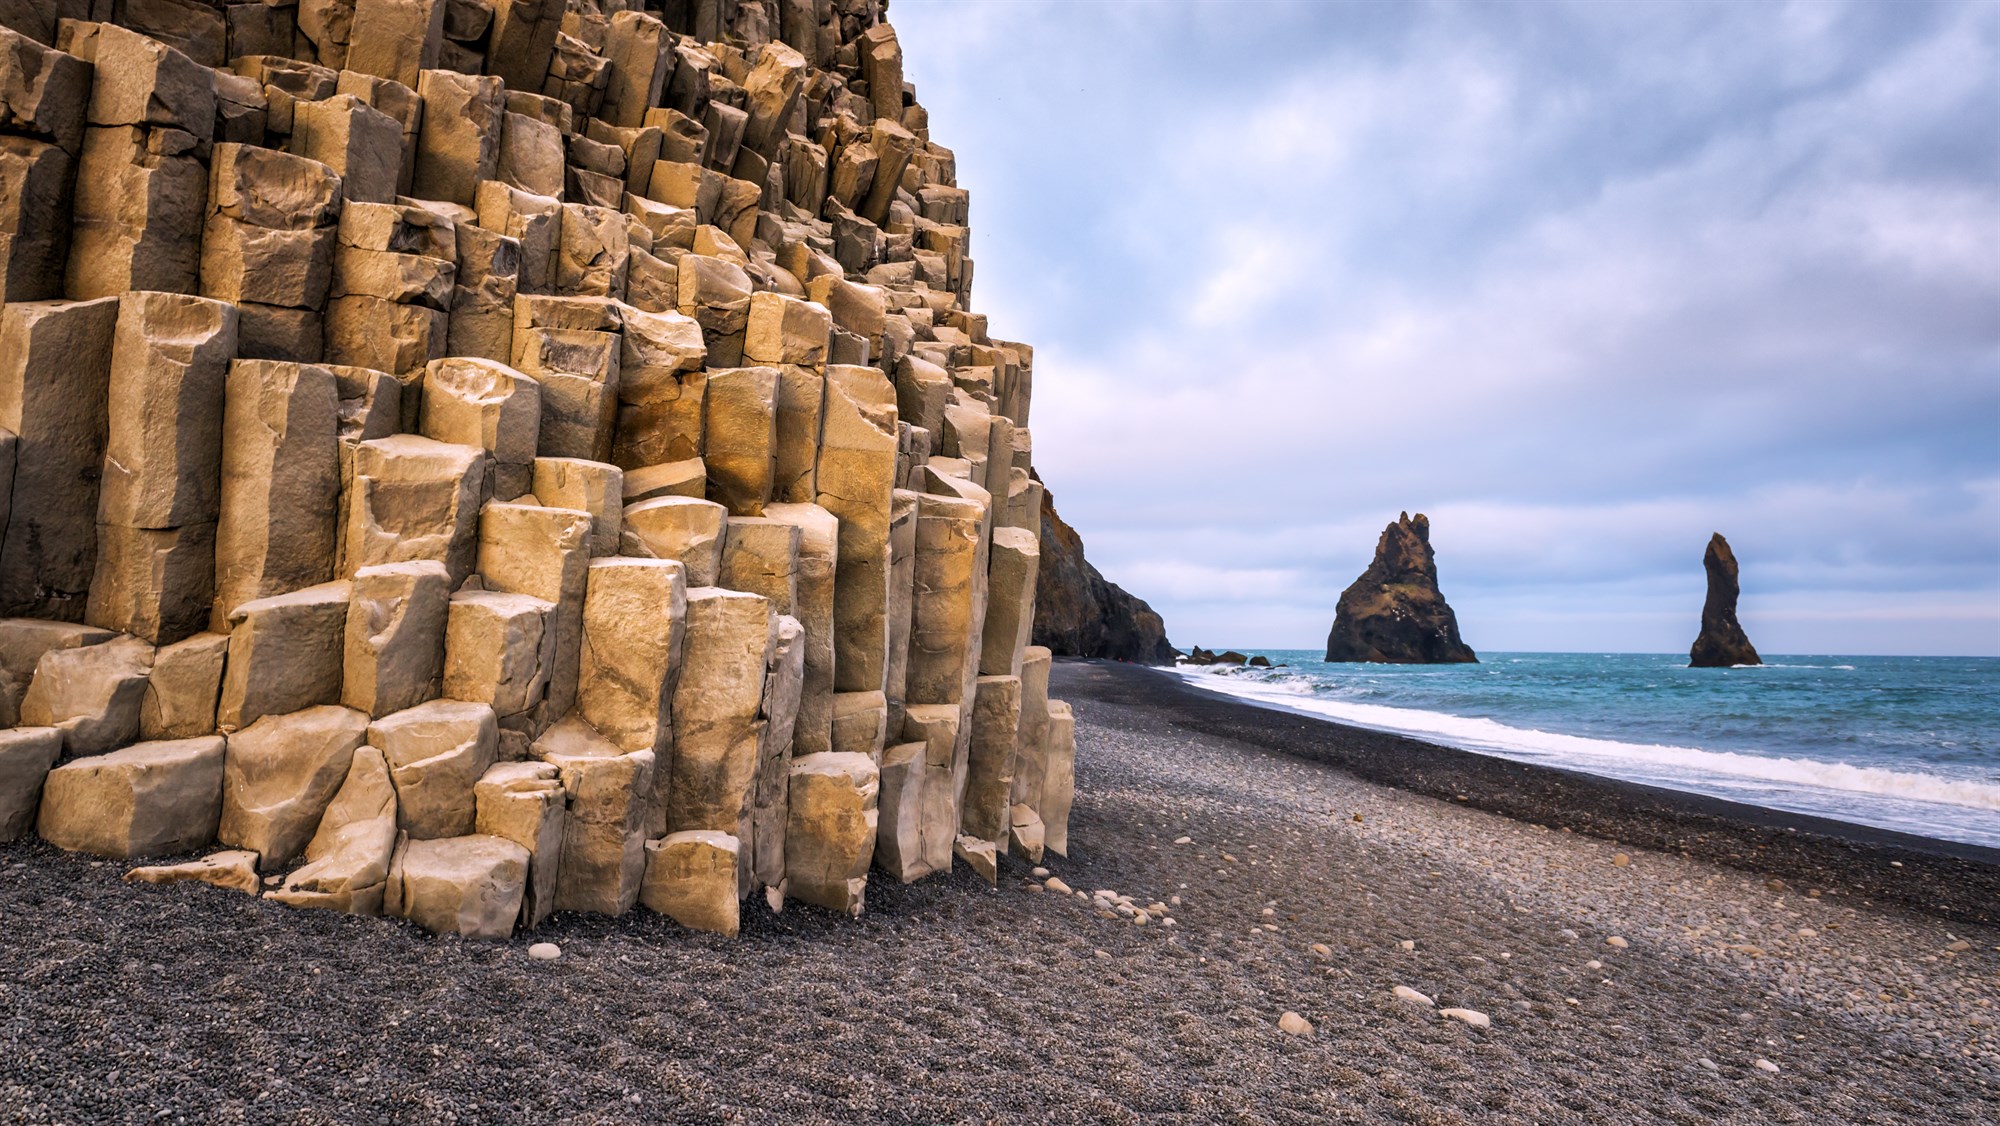 Pillar rocks at Reynisfjara Beach, Iceland.